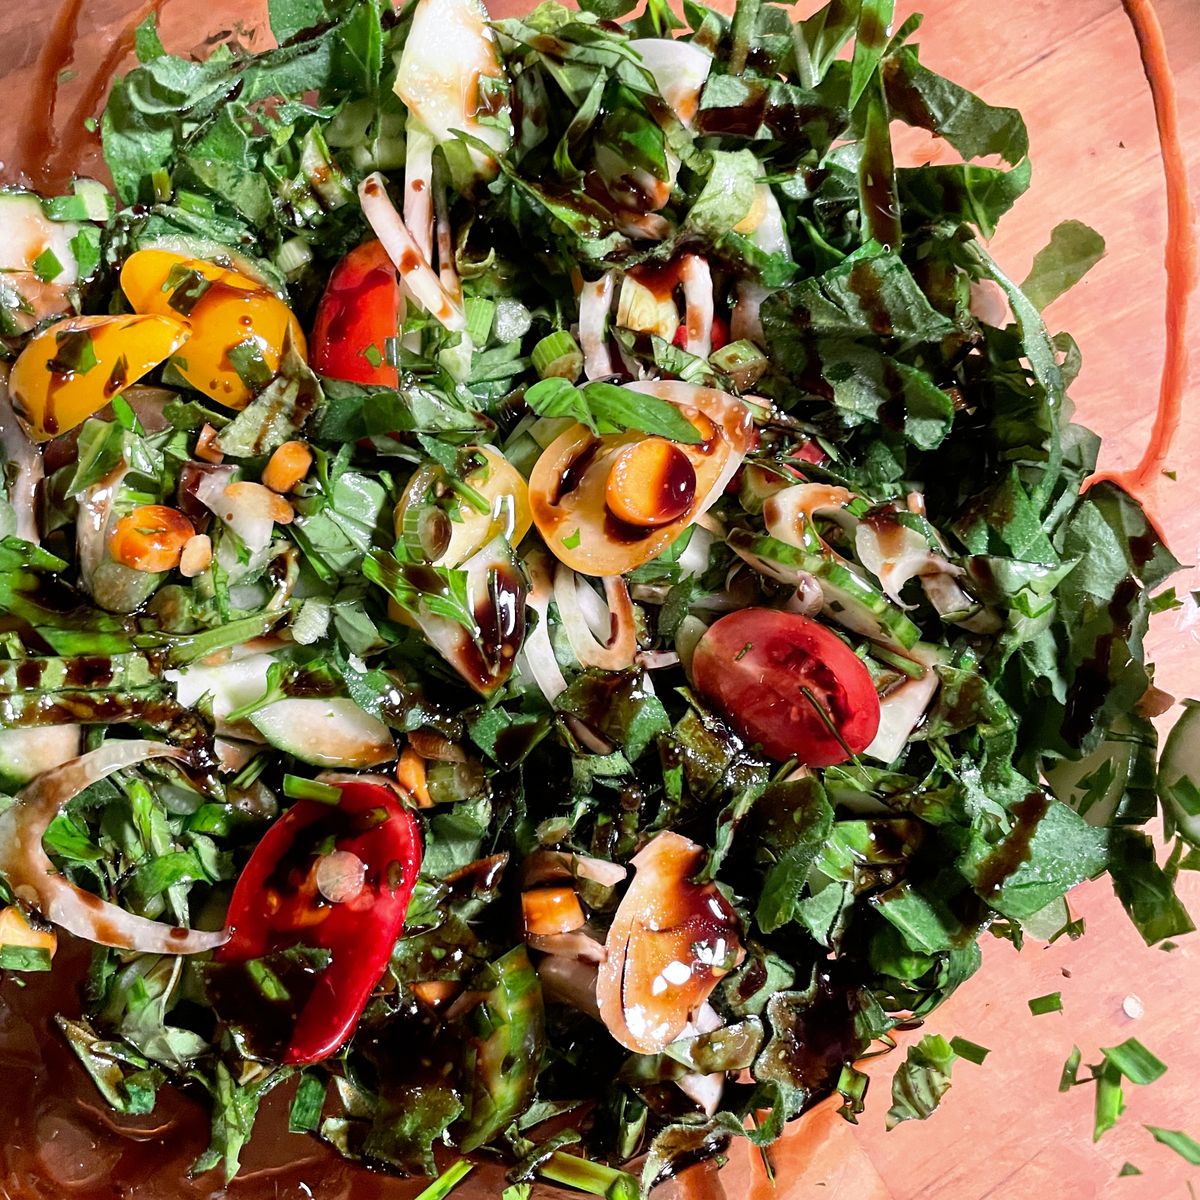 Herbed Turkish Rocket Salad with Fennel and Spring Garden Veggies